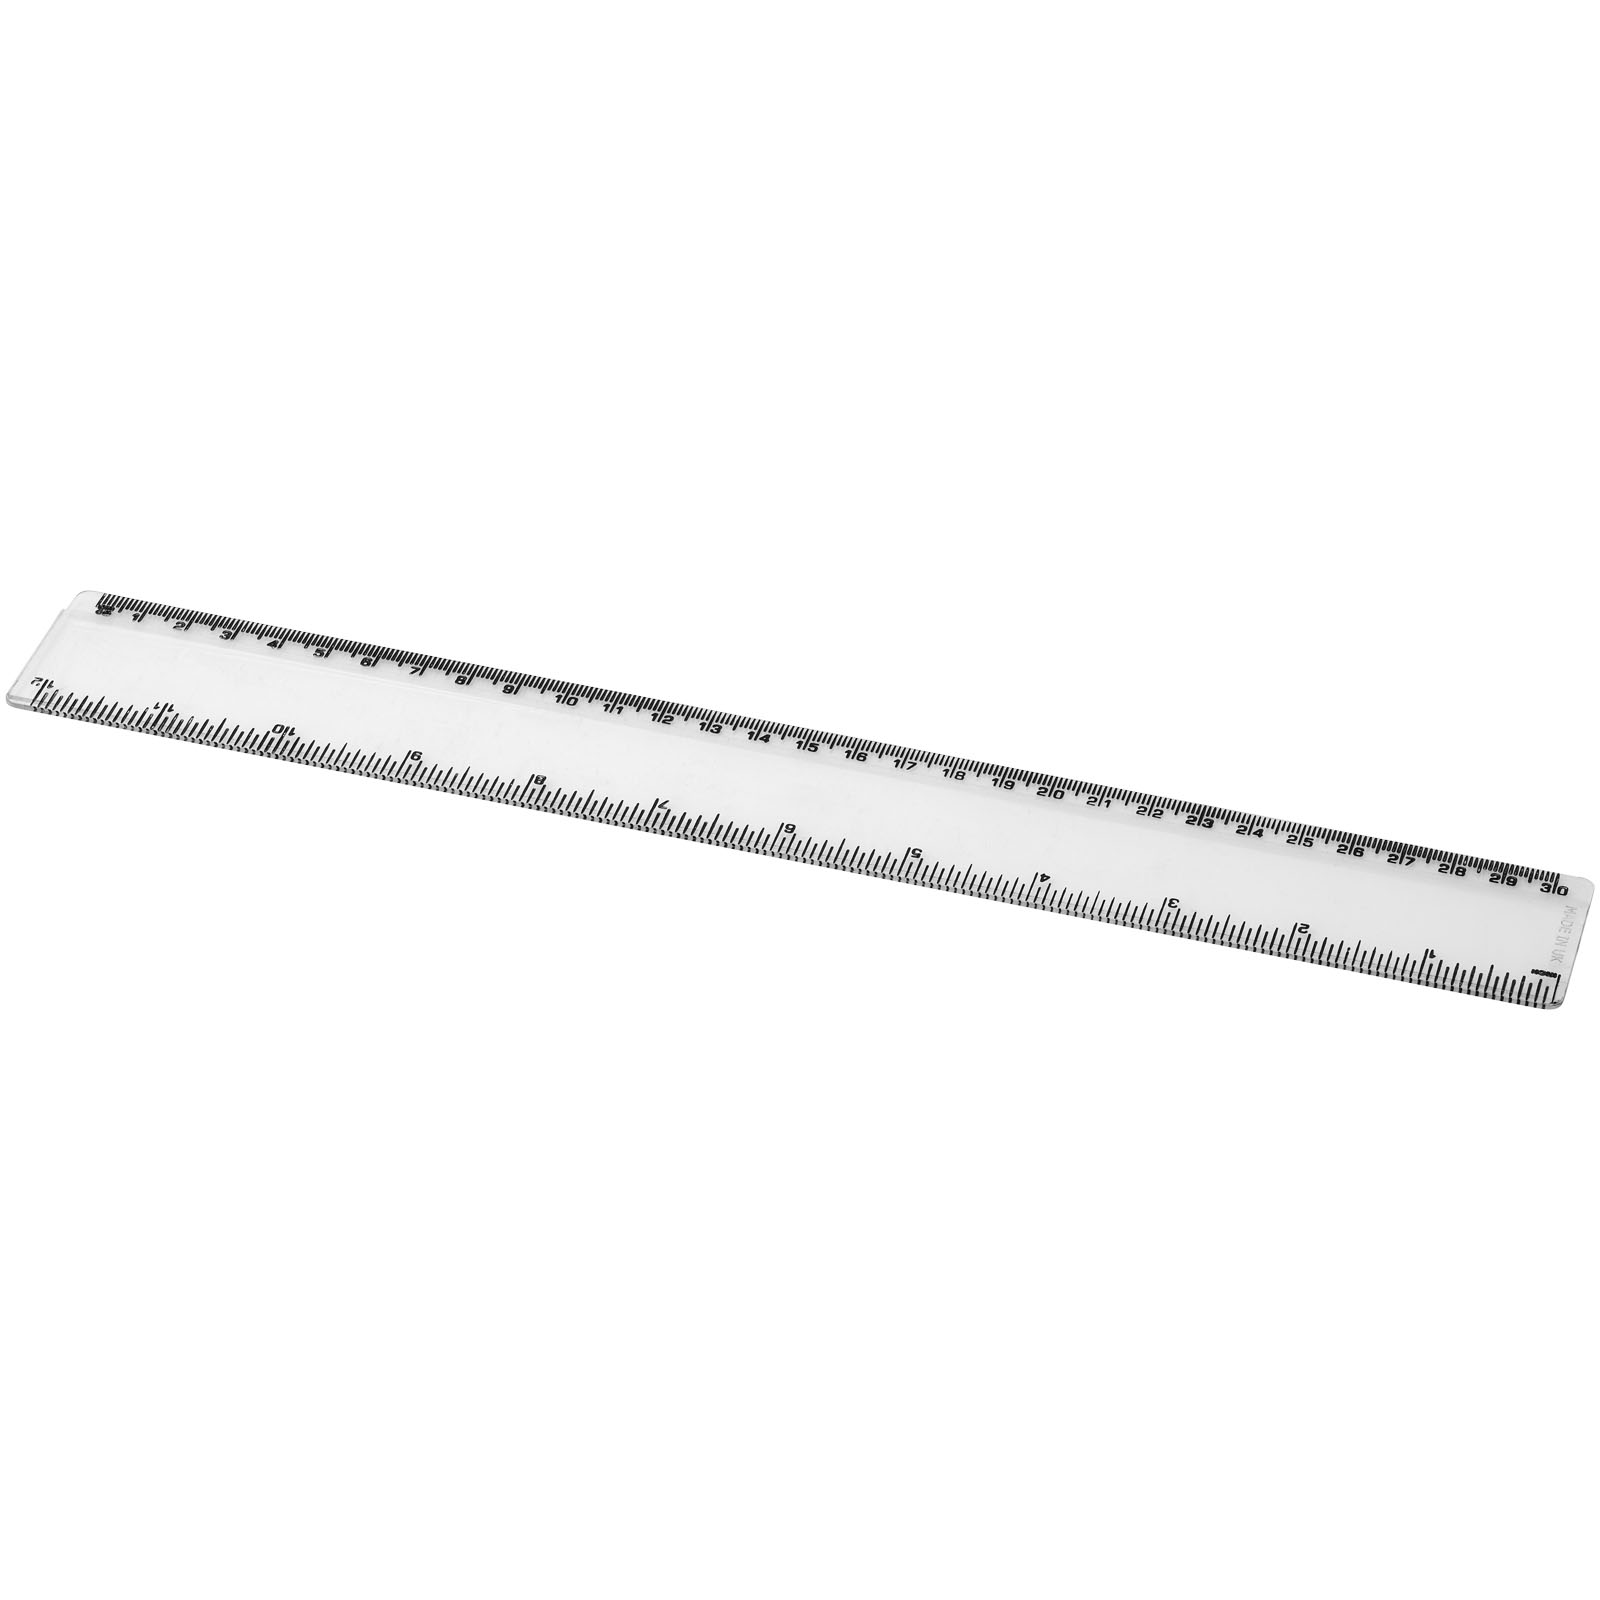 Advertising Desk Accessories - Renzo 30 cm plastic ruler